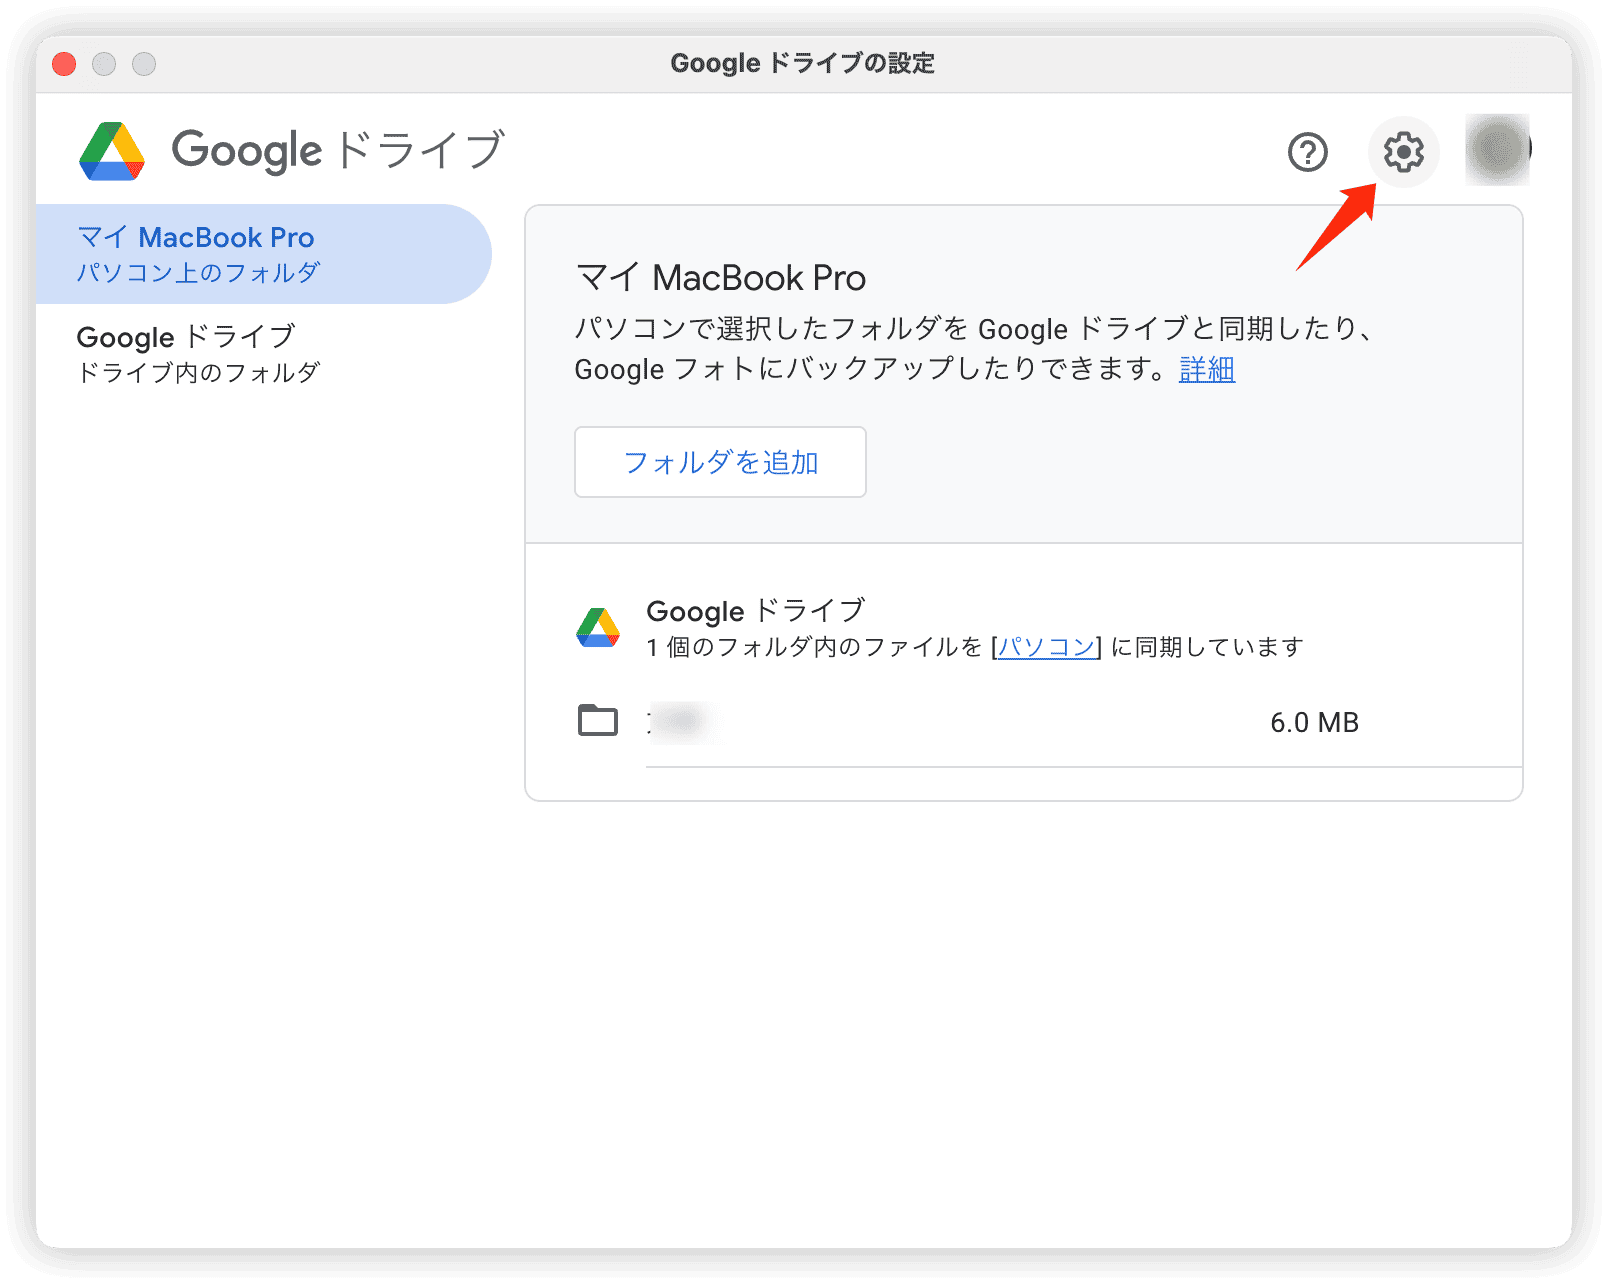 Google Driveアカウントの接続を解除する - 設定